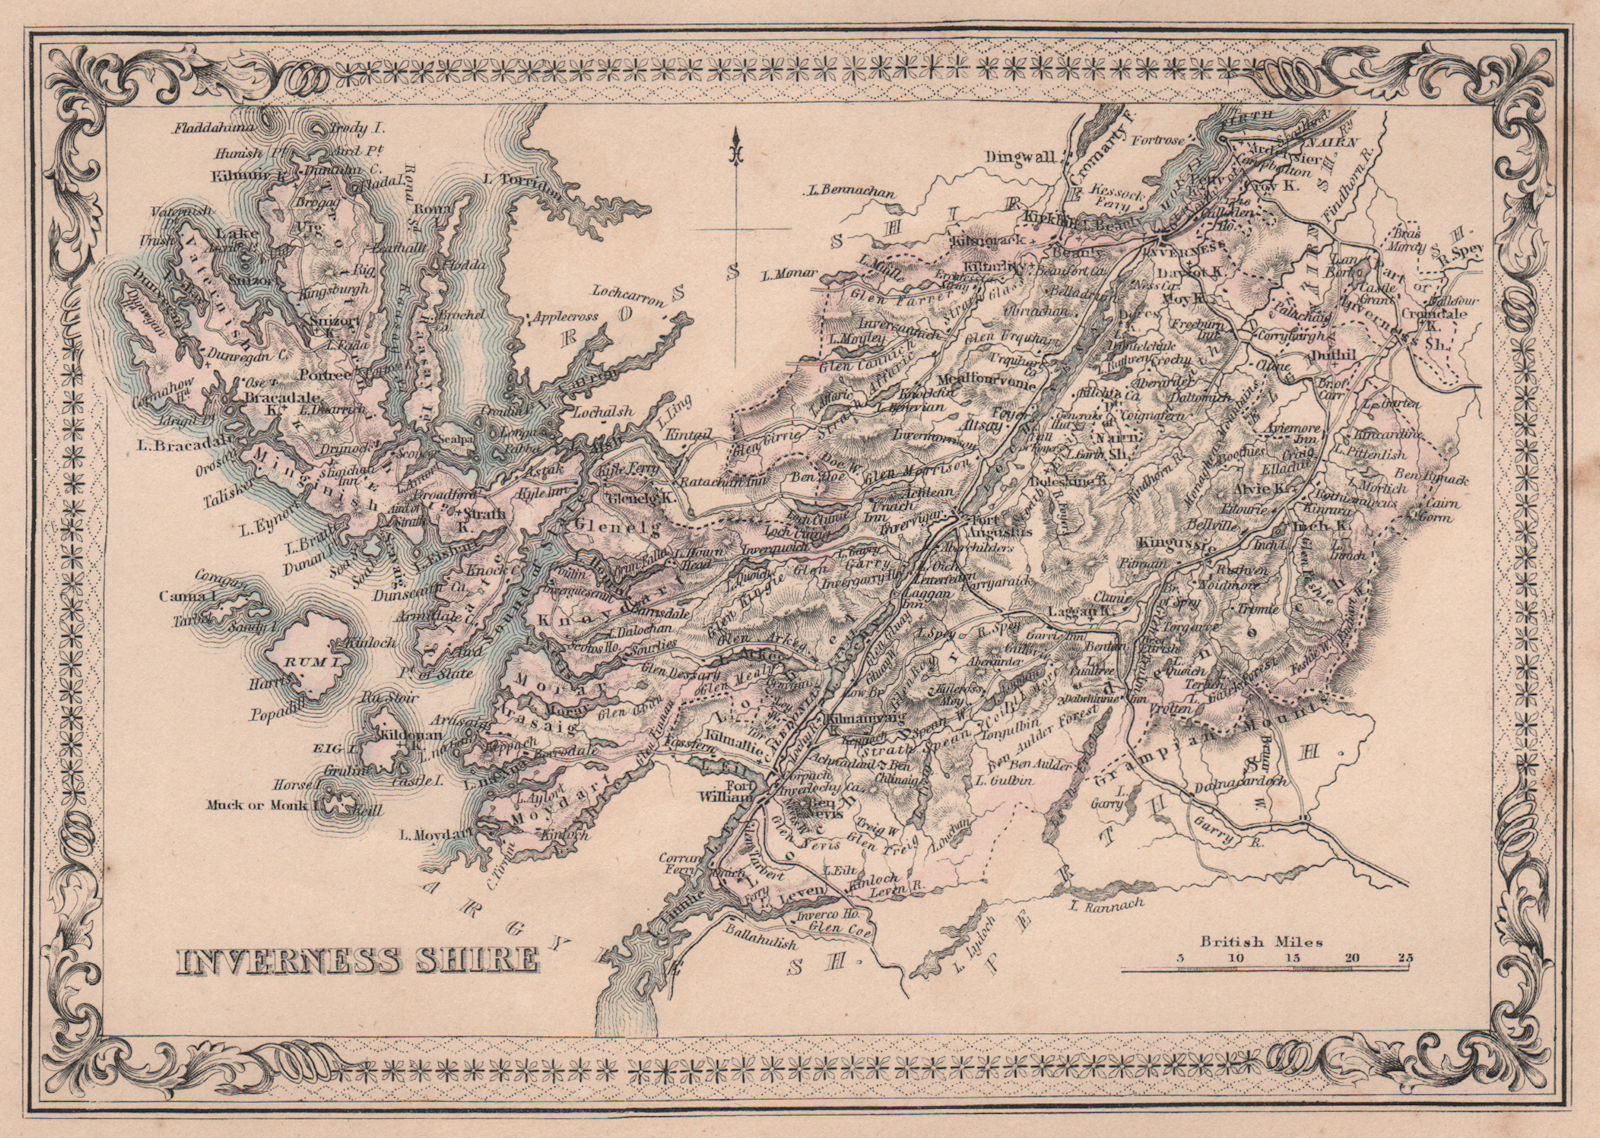 Associate Product Decorative antique county map of Inverness-shire, Scotland. FULLARTON 1868